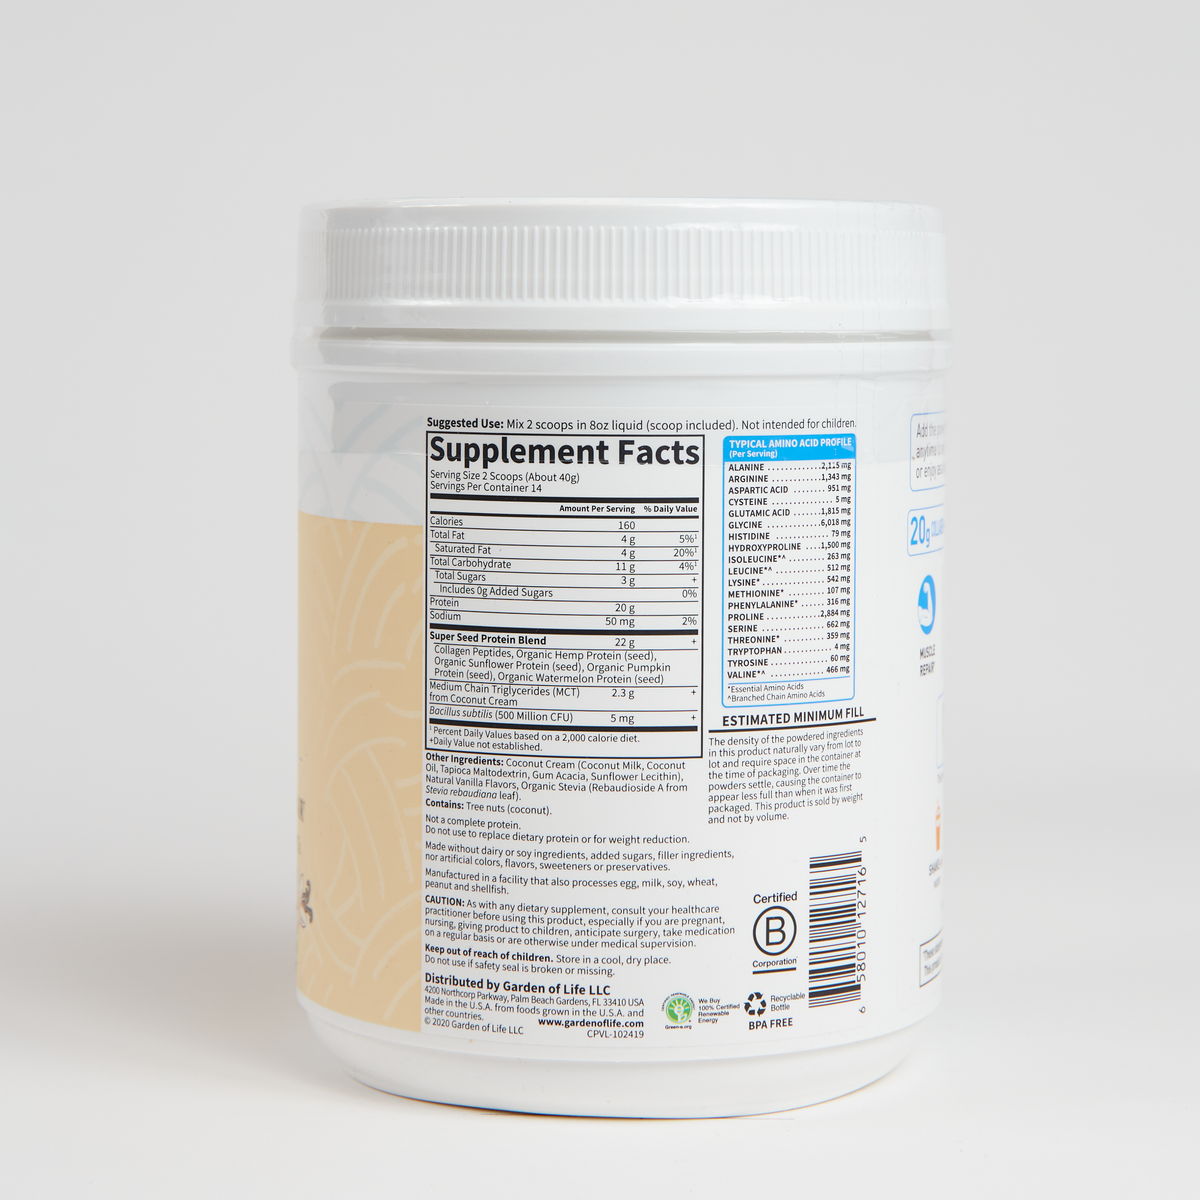 Garden Of Life Grass Fed Collagen Protein Vanilla - 28 Servings - 560 g